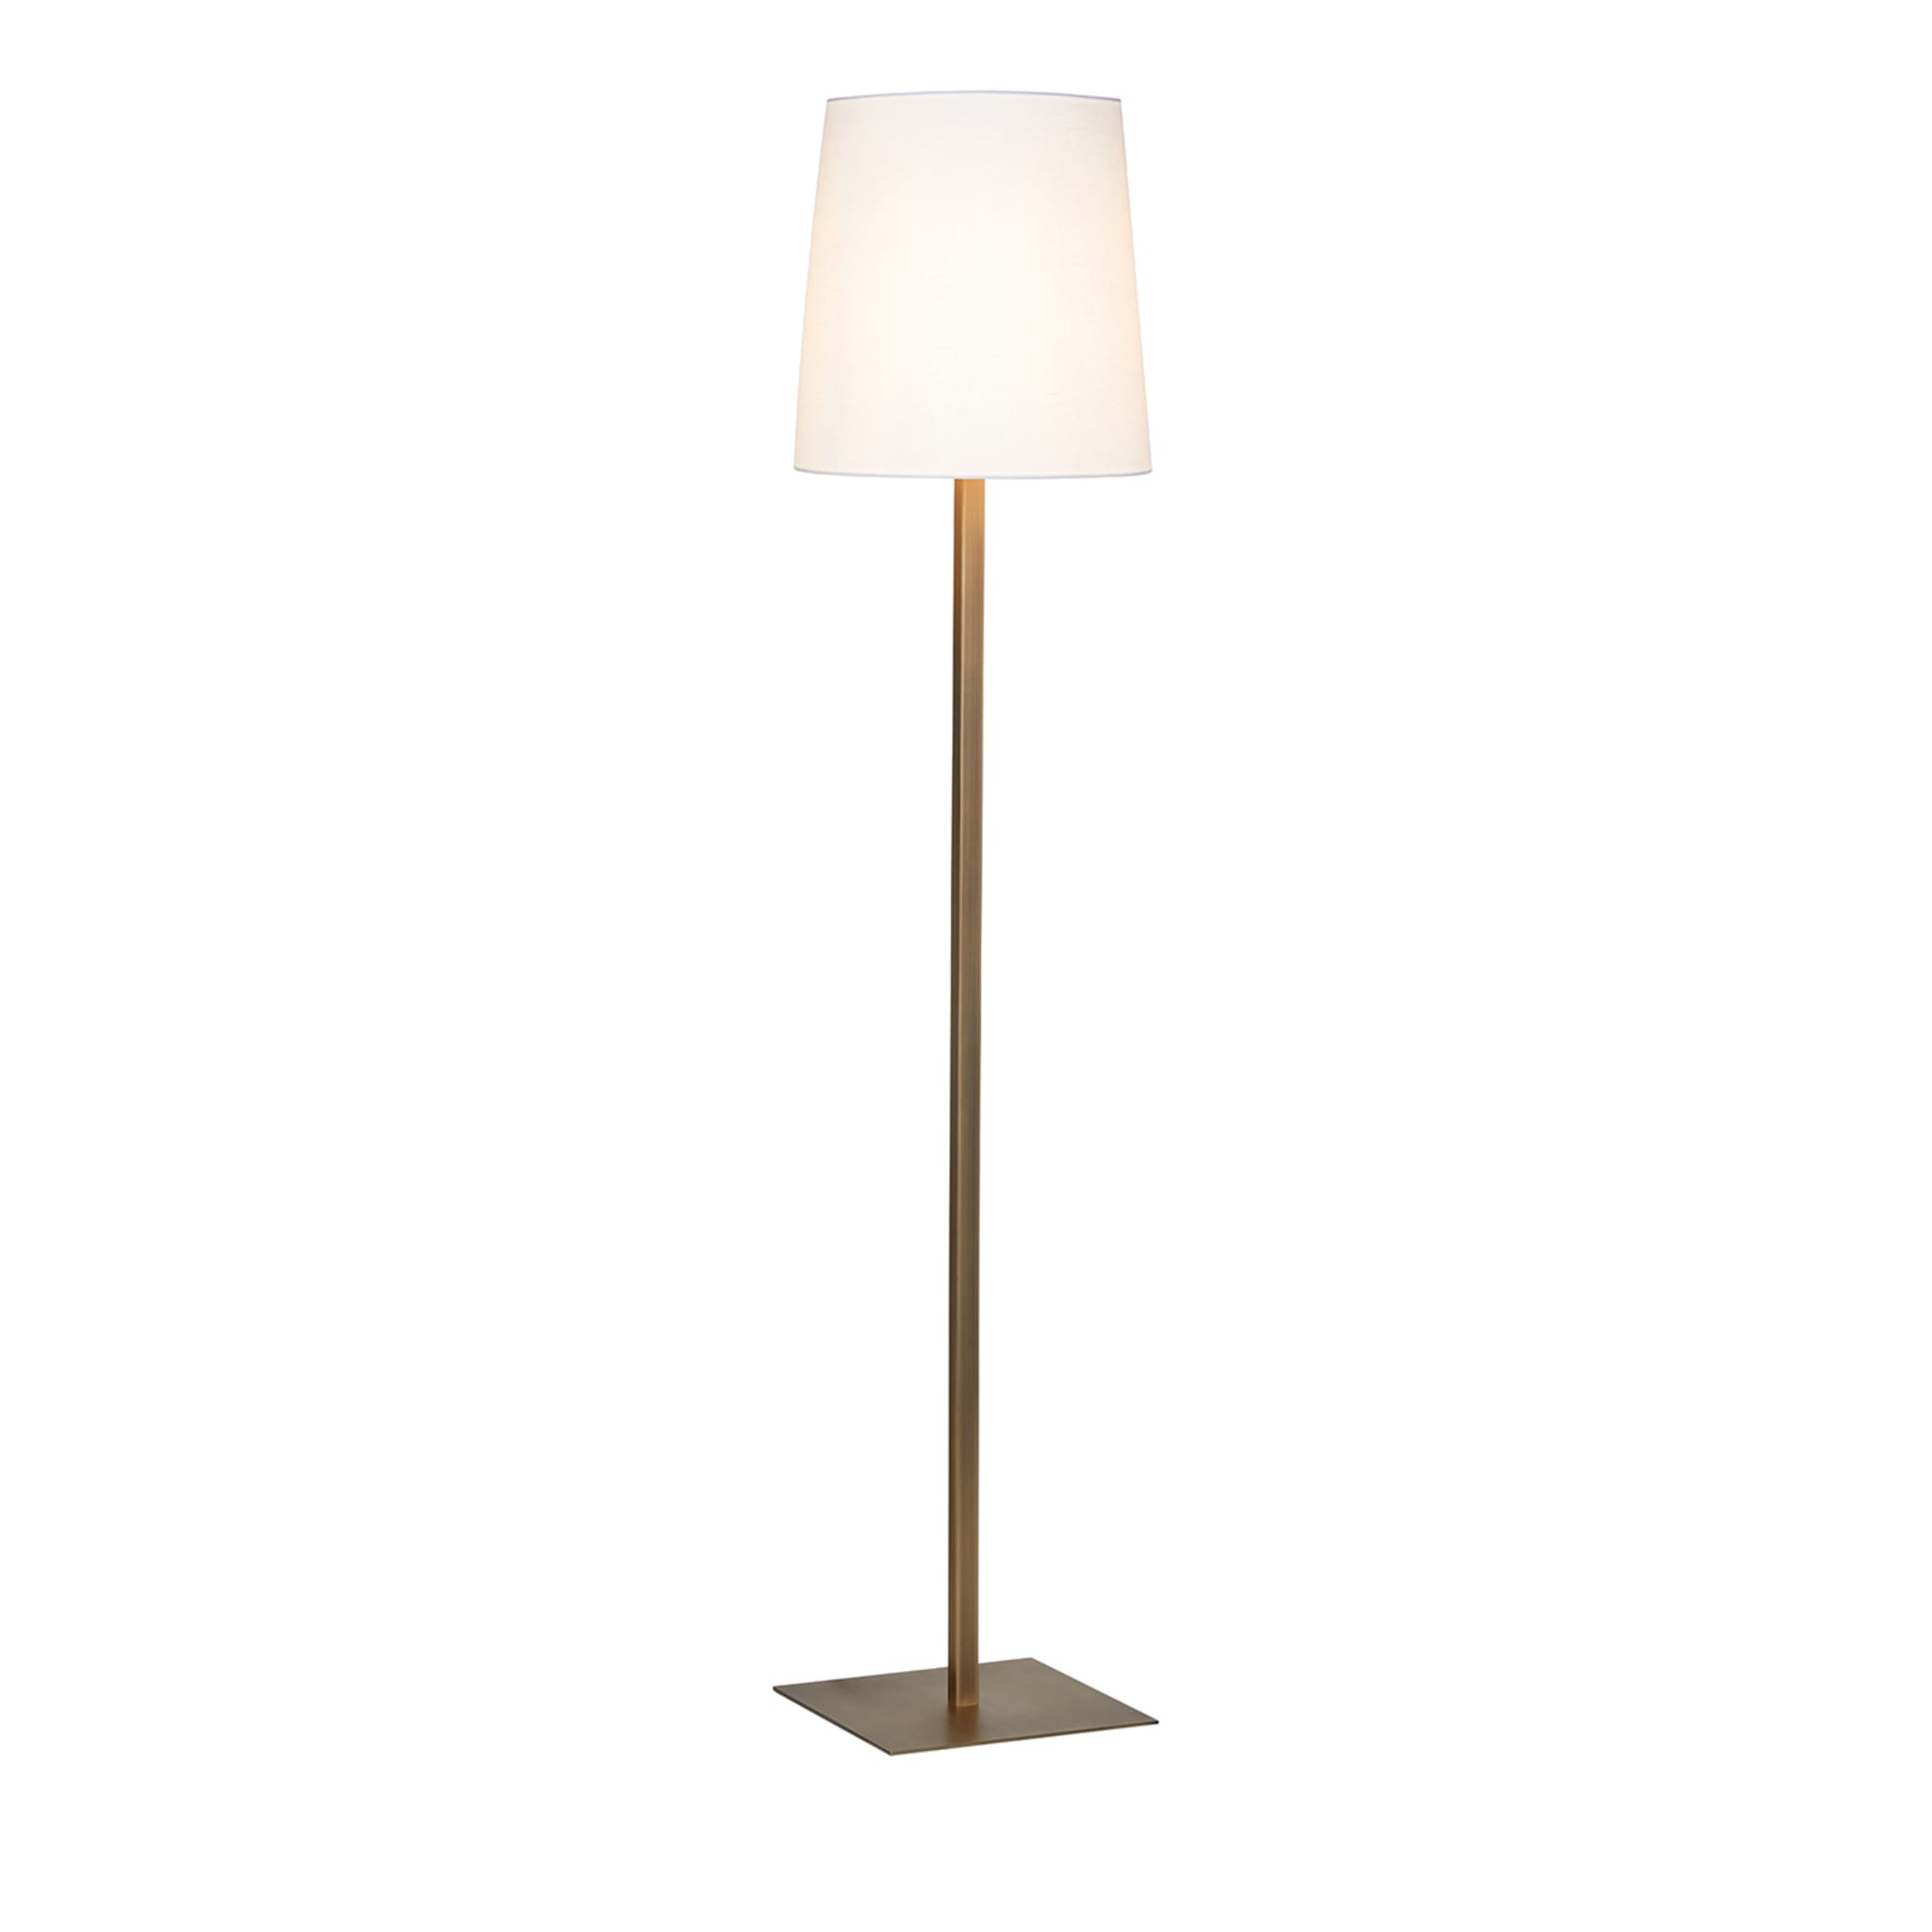 Tonda Bronzed Floor Lamp with White Cotton Shade - Main view